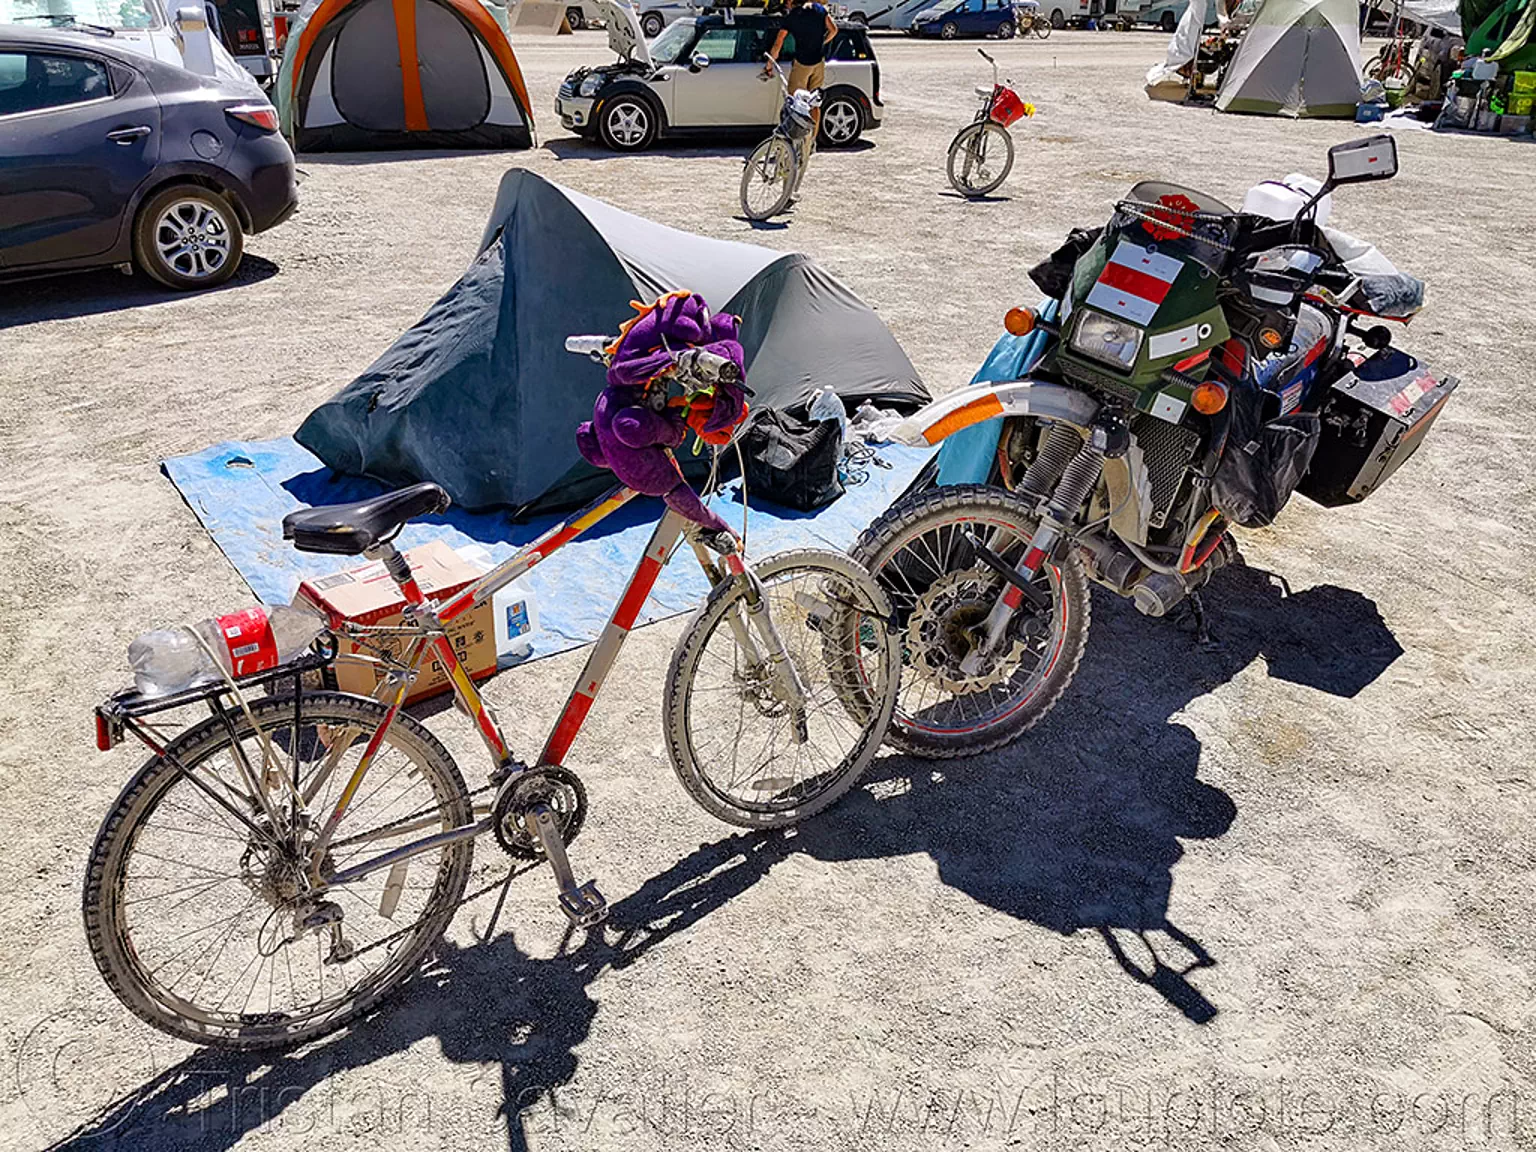 my small camp - burning man 2019, bicycle, burning man, camp, klr 650, motorcycle, tent